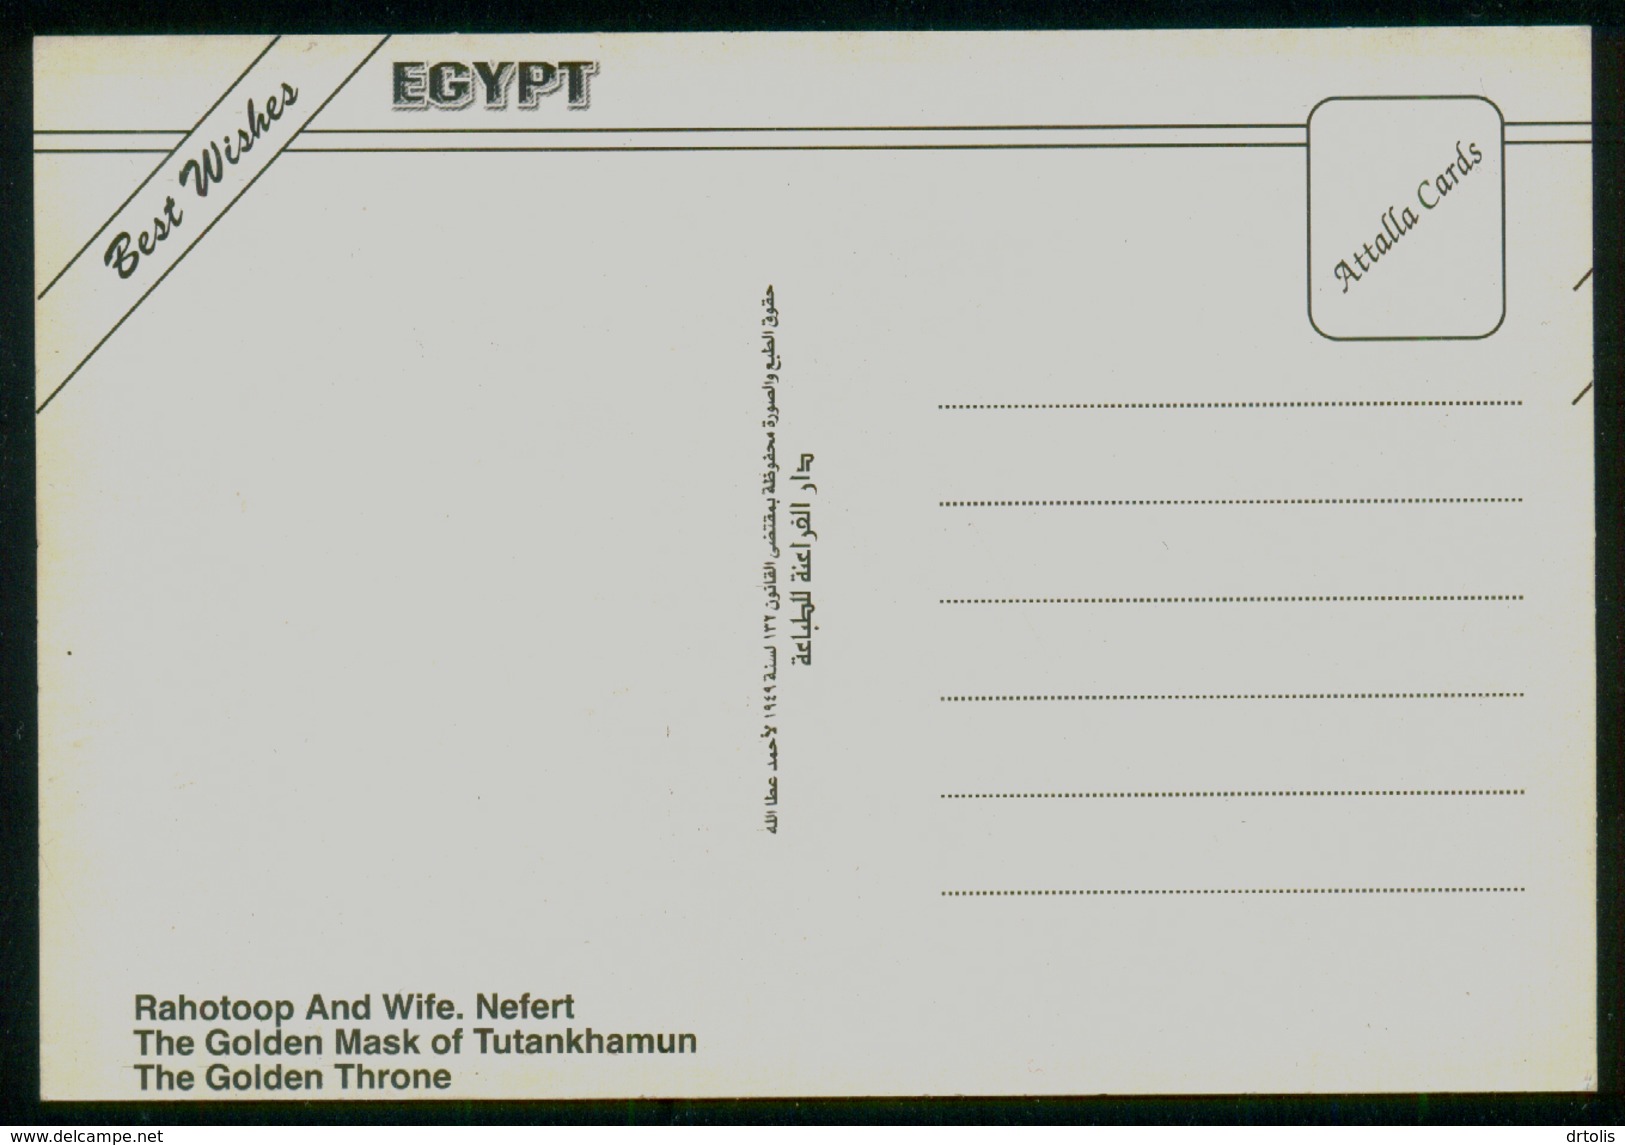 EGYPT / EGYPTOLOGY / RAHOTOOP & WIFE NEFERT / THE GOLDEN MASK OF TUTANKHAMUN / THE GOLDEN THRONE / VF . - Musées